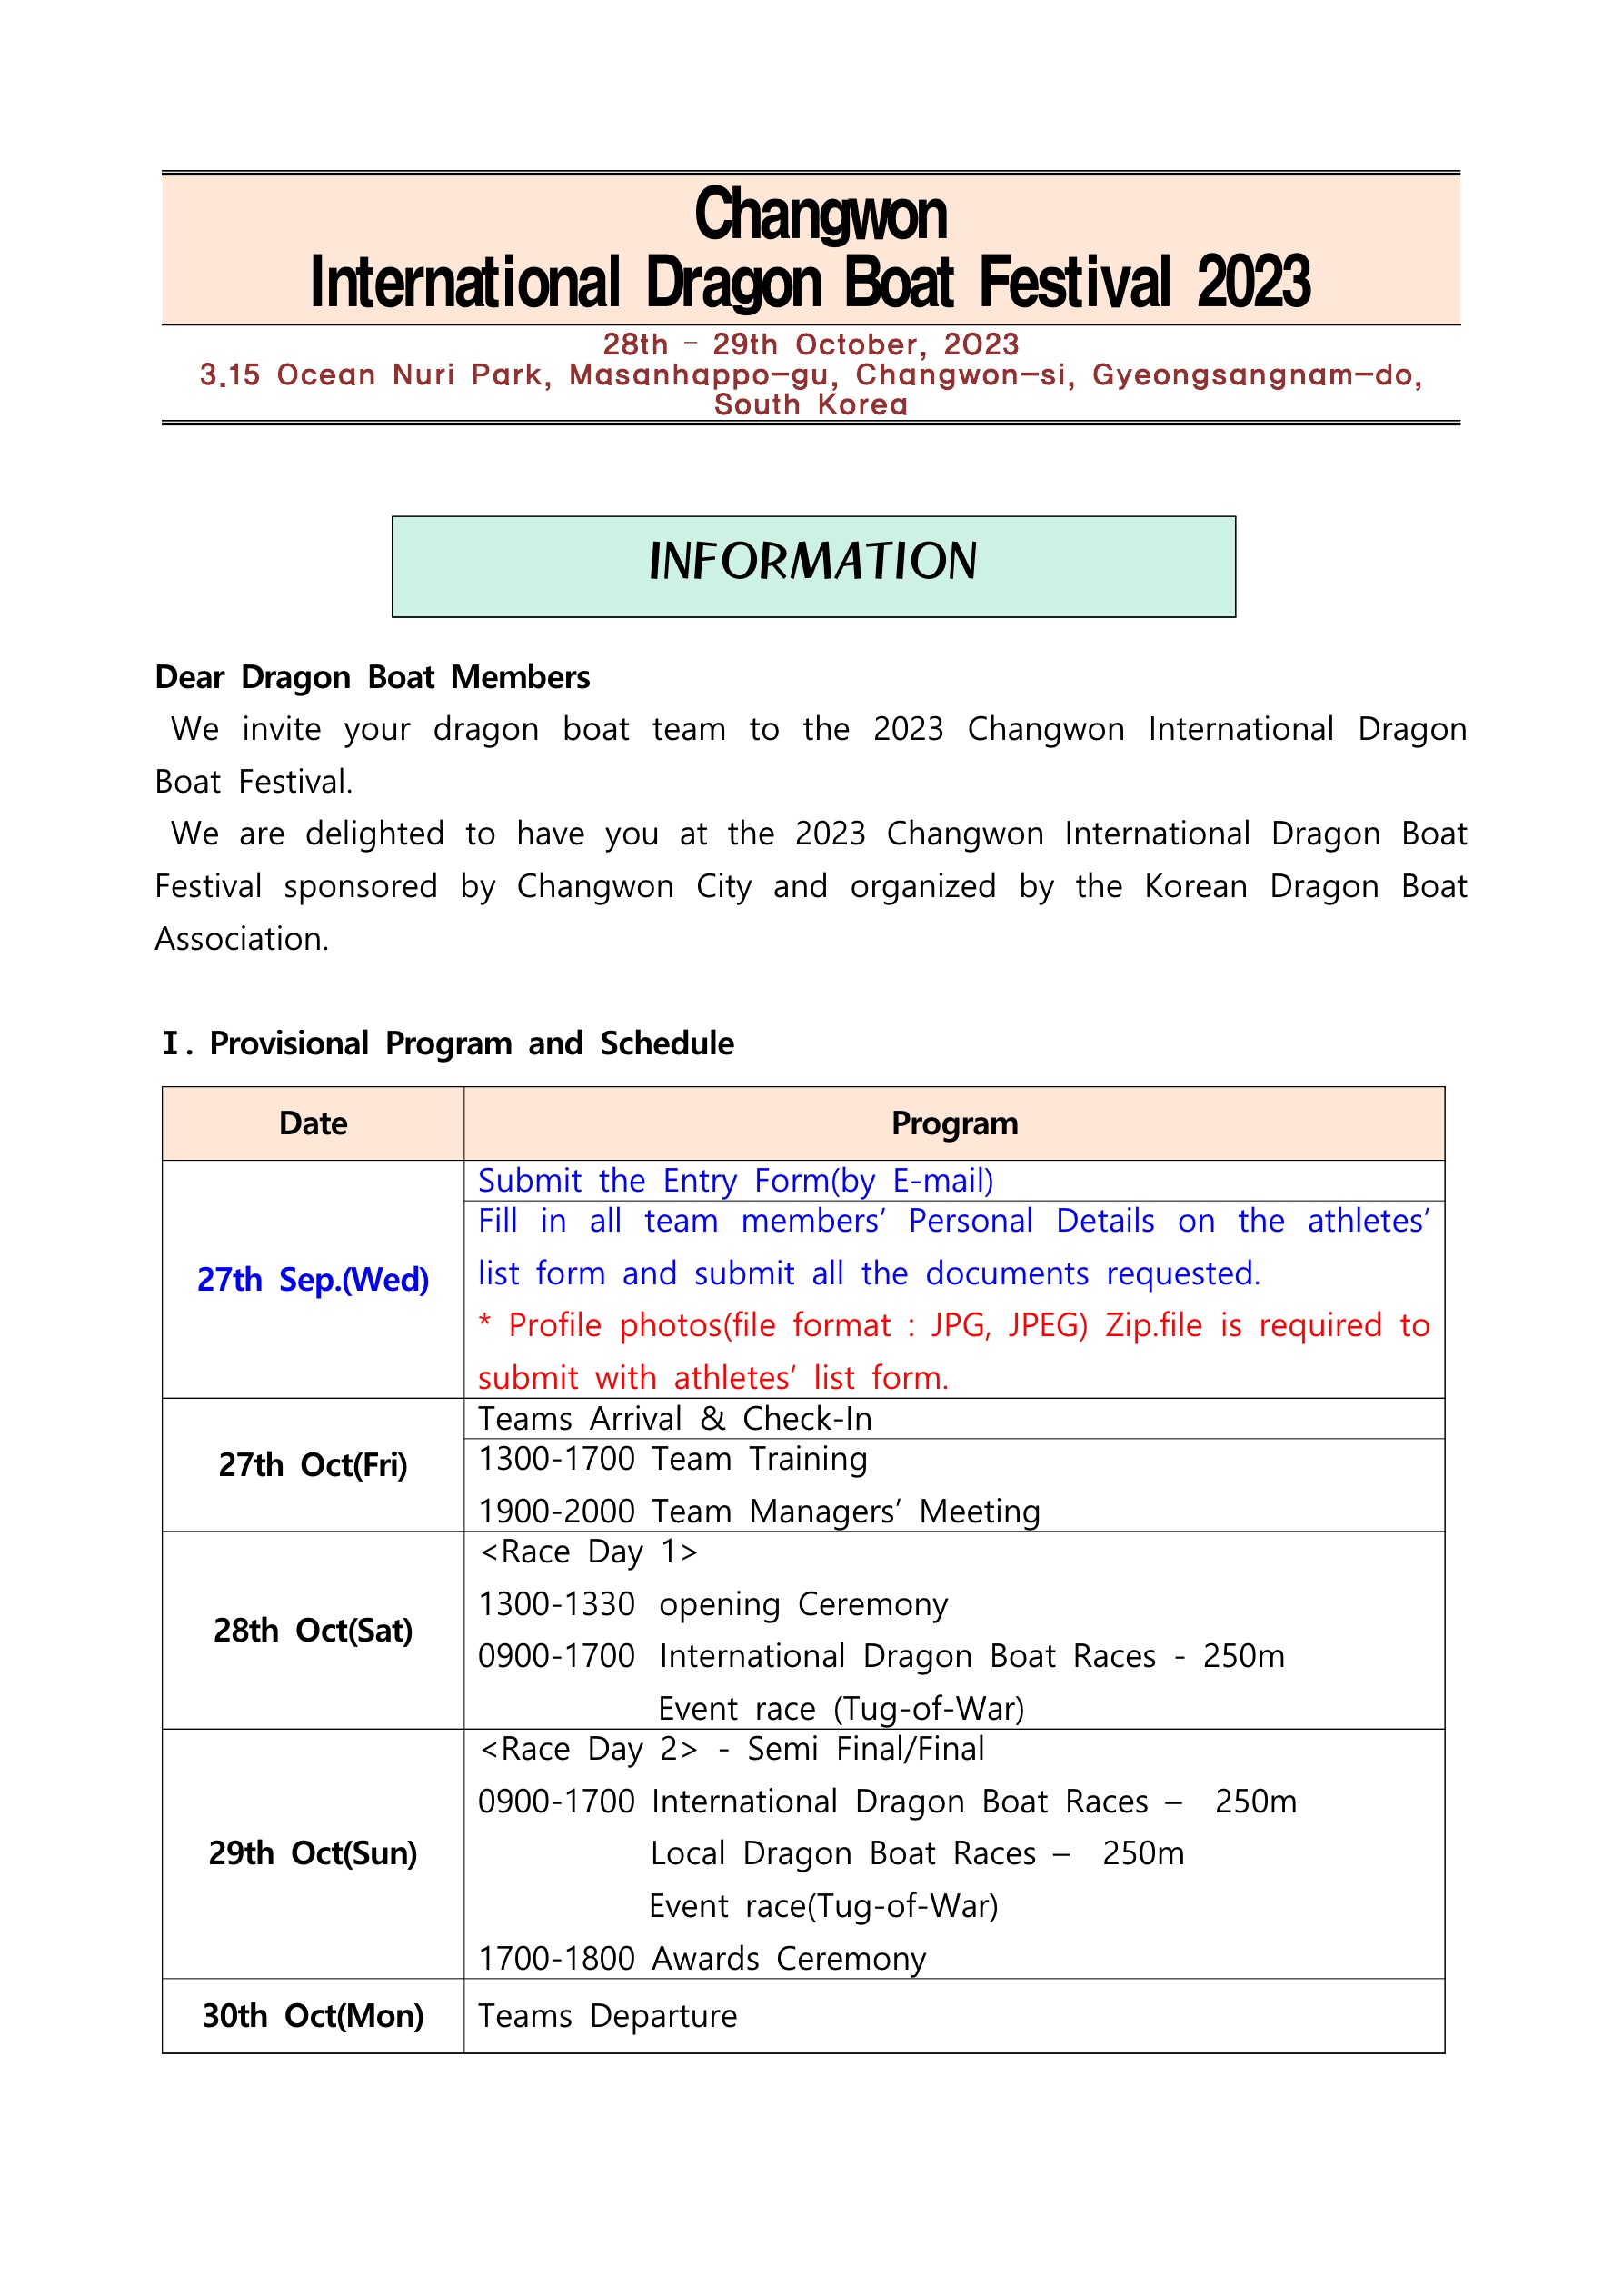 INFORMATION BULLETIN(Changwon)_1.jpg